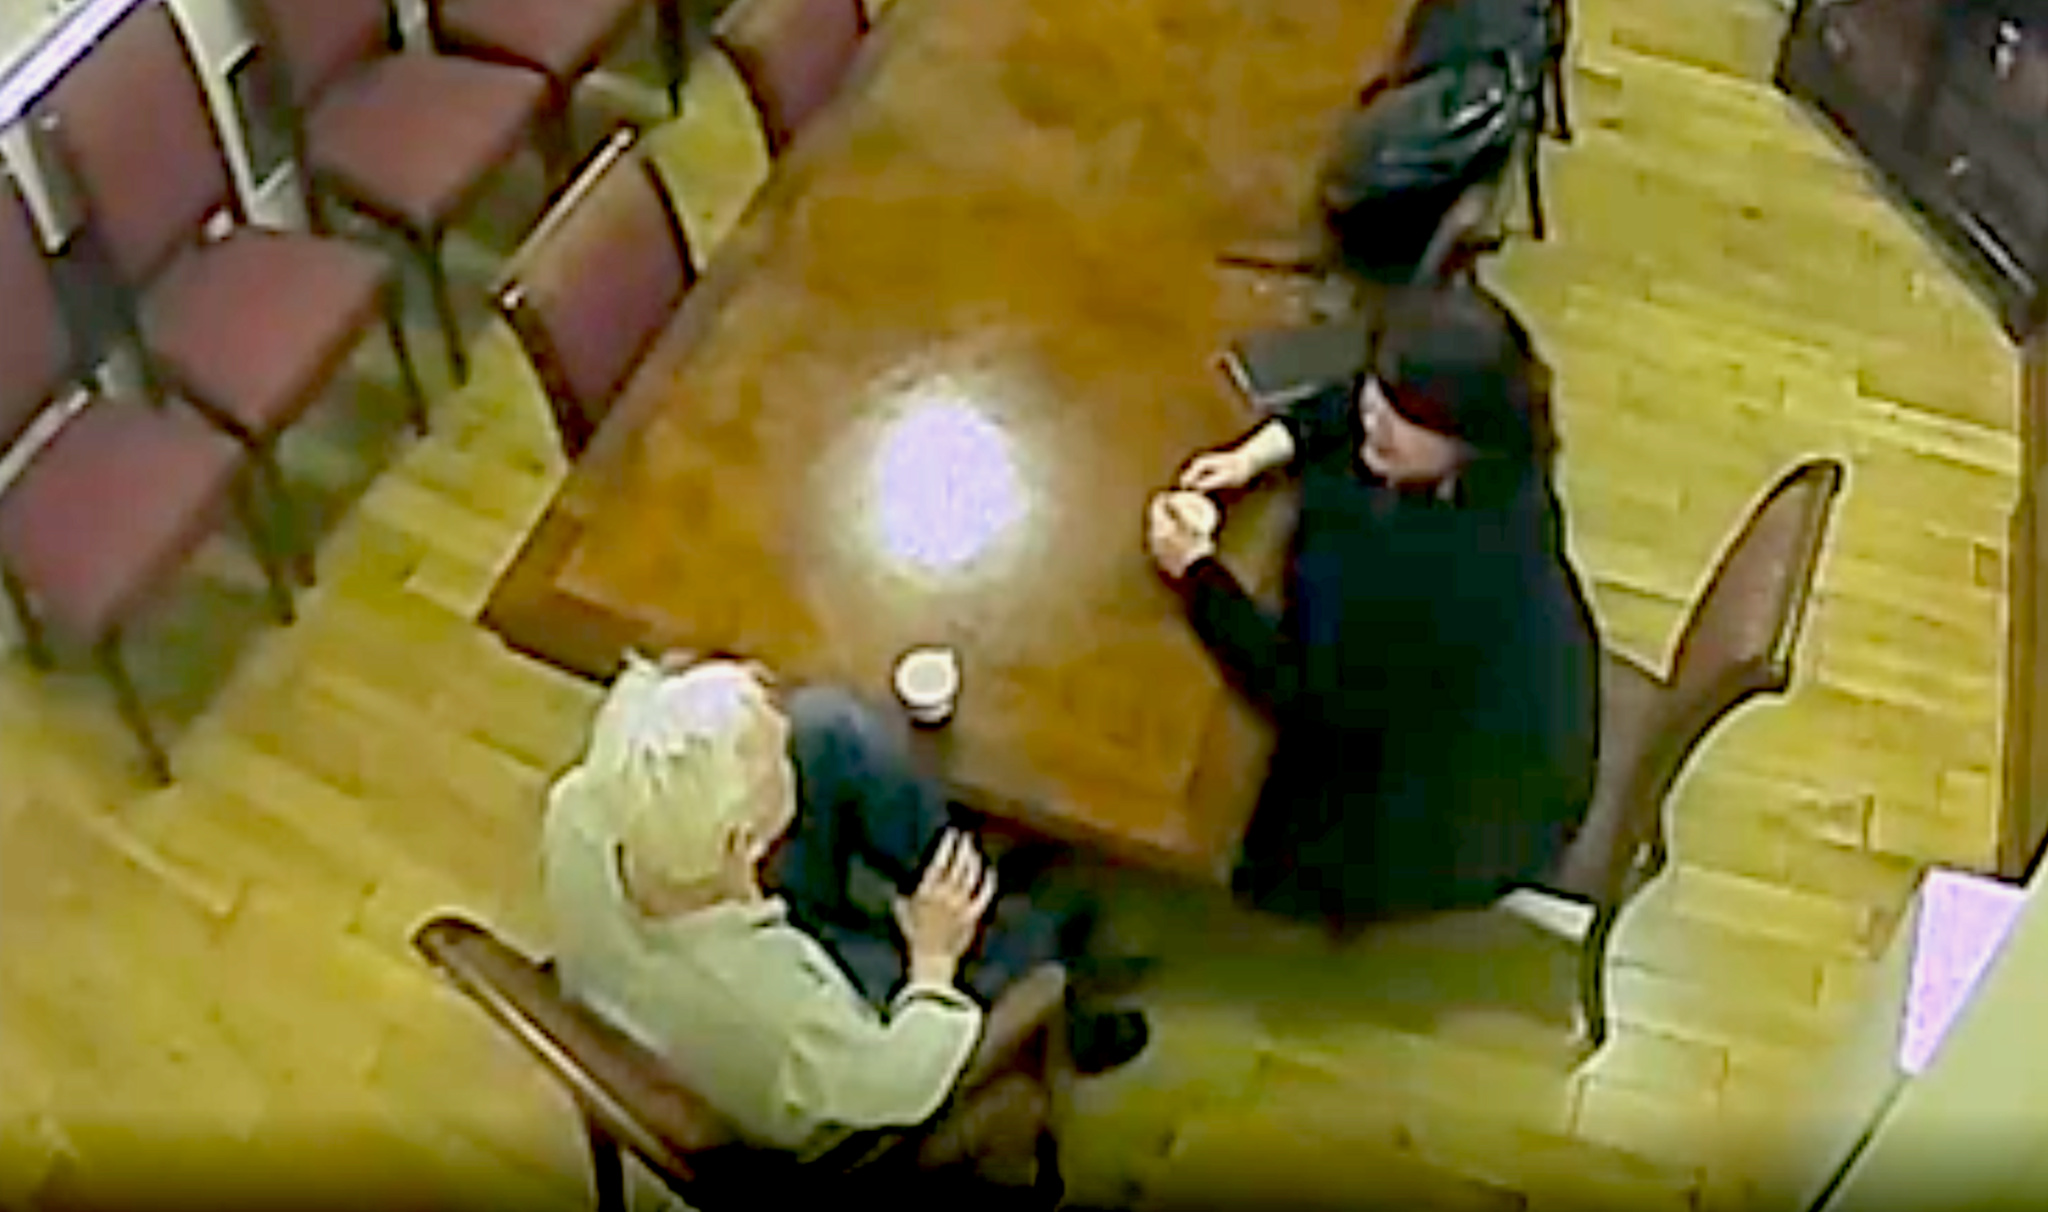 Surveillance footage of Stefania Maurizi meeting Julian Assange in the Ecuadorian embassy